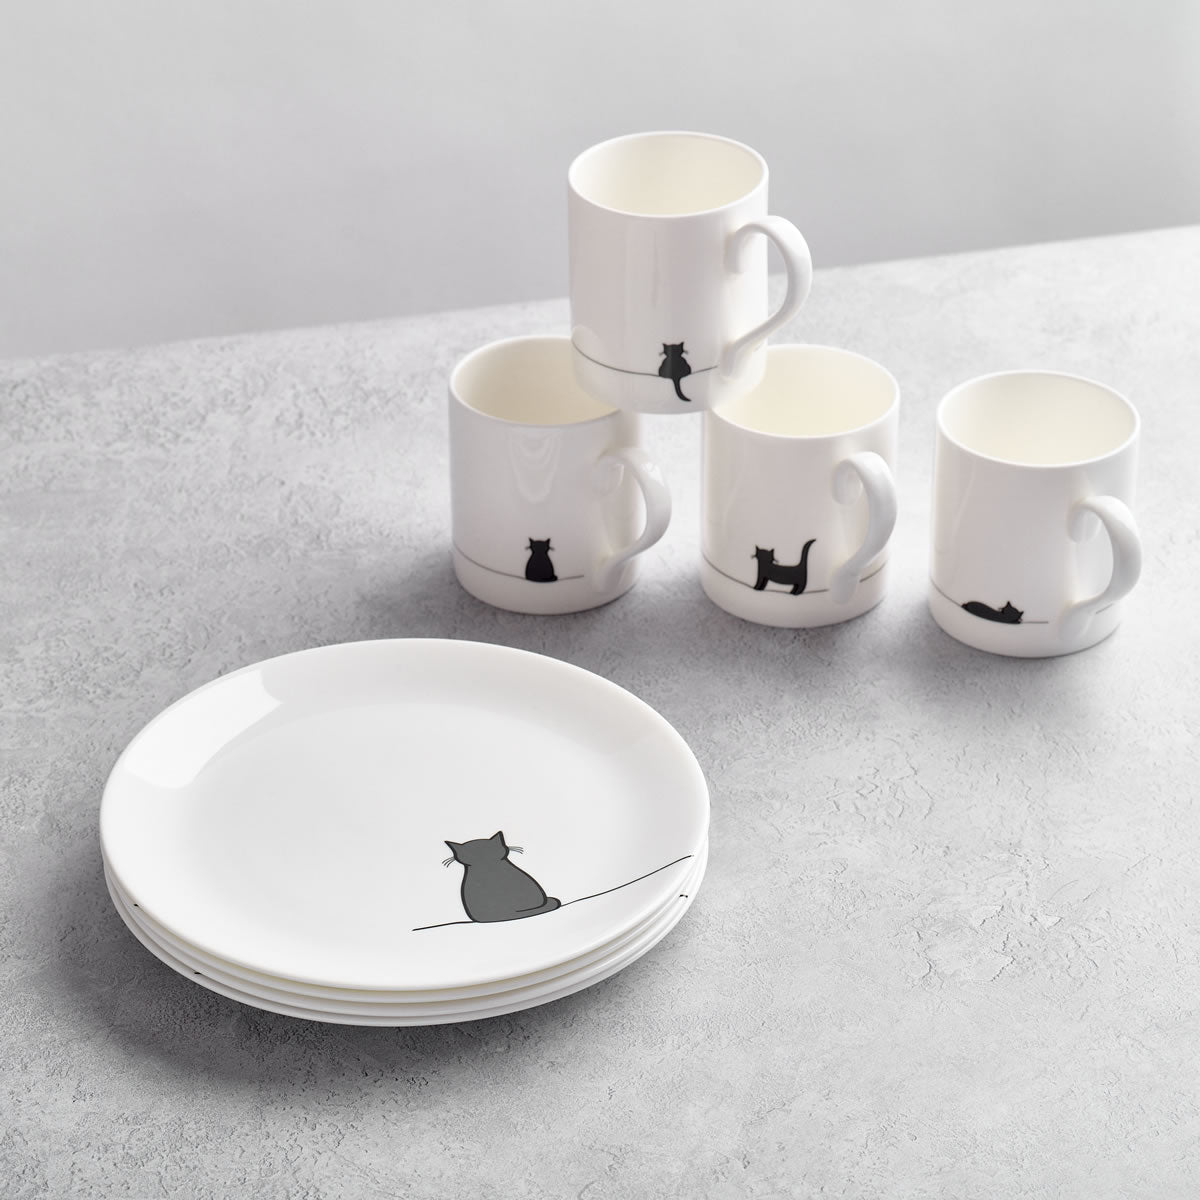 Cat Collection Tea Set by Jin Designs